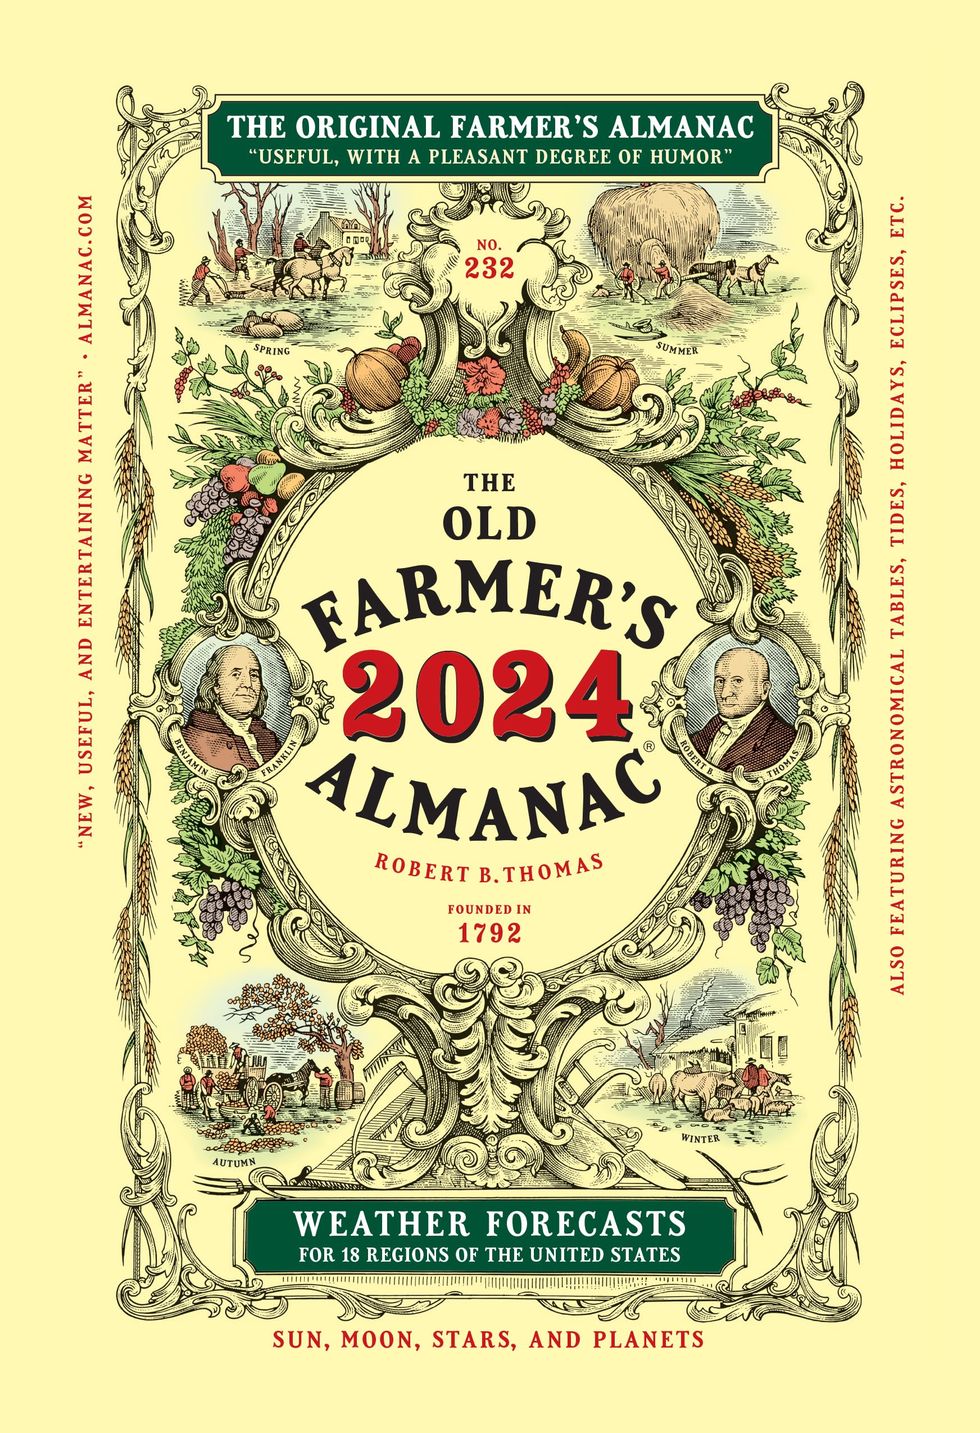 Extended Winter Forecast for 2023-2024 - Farmers' Almanac